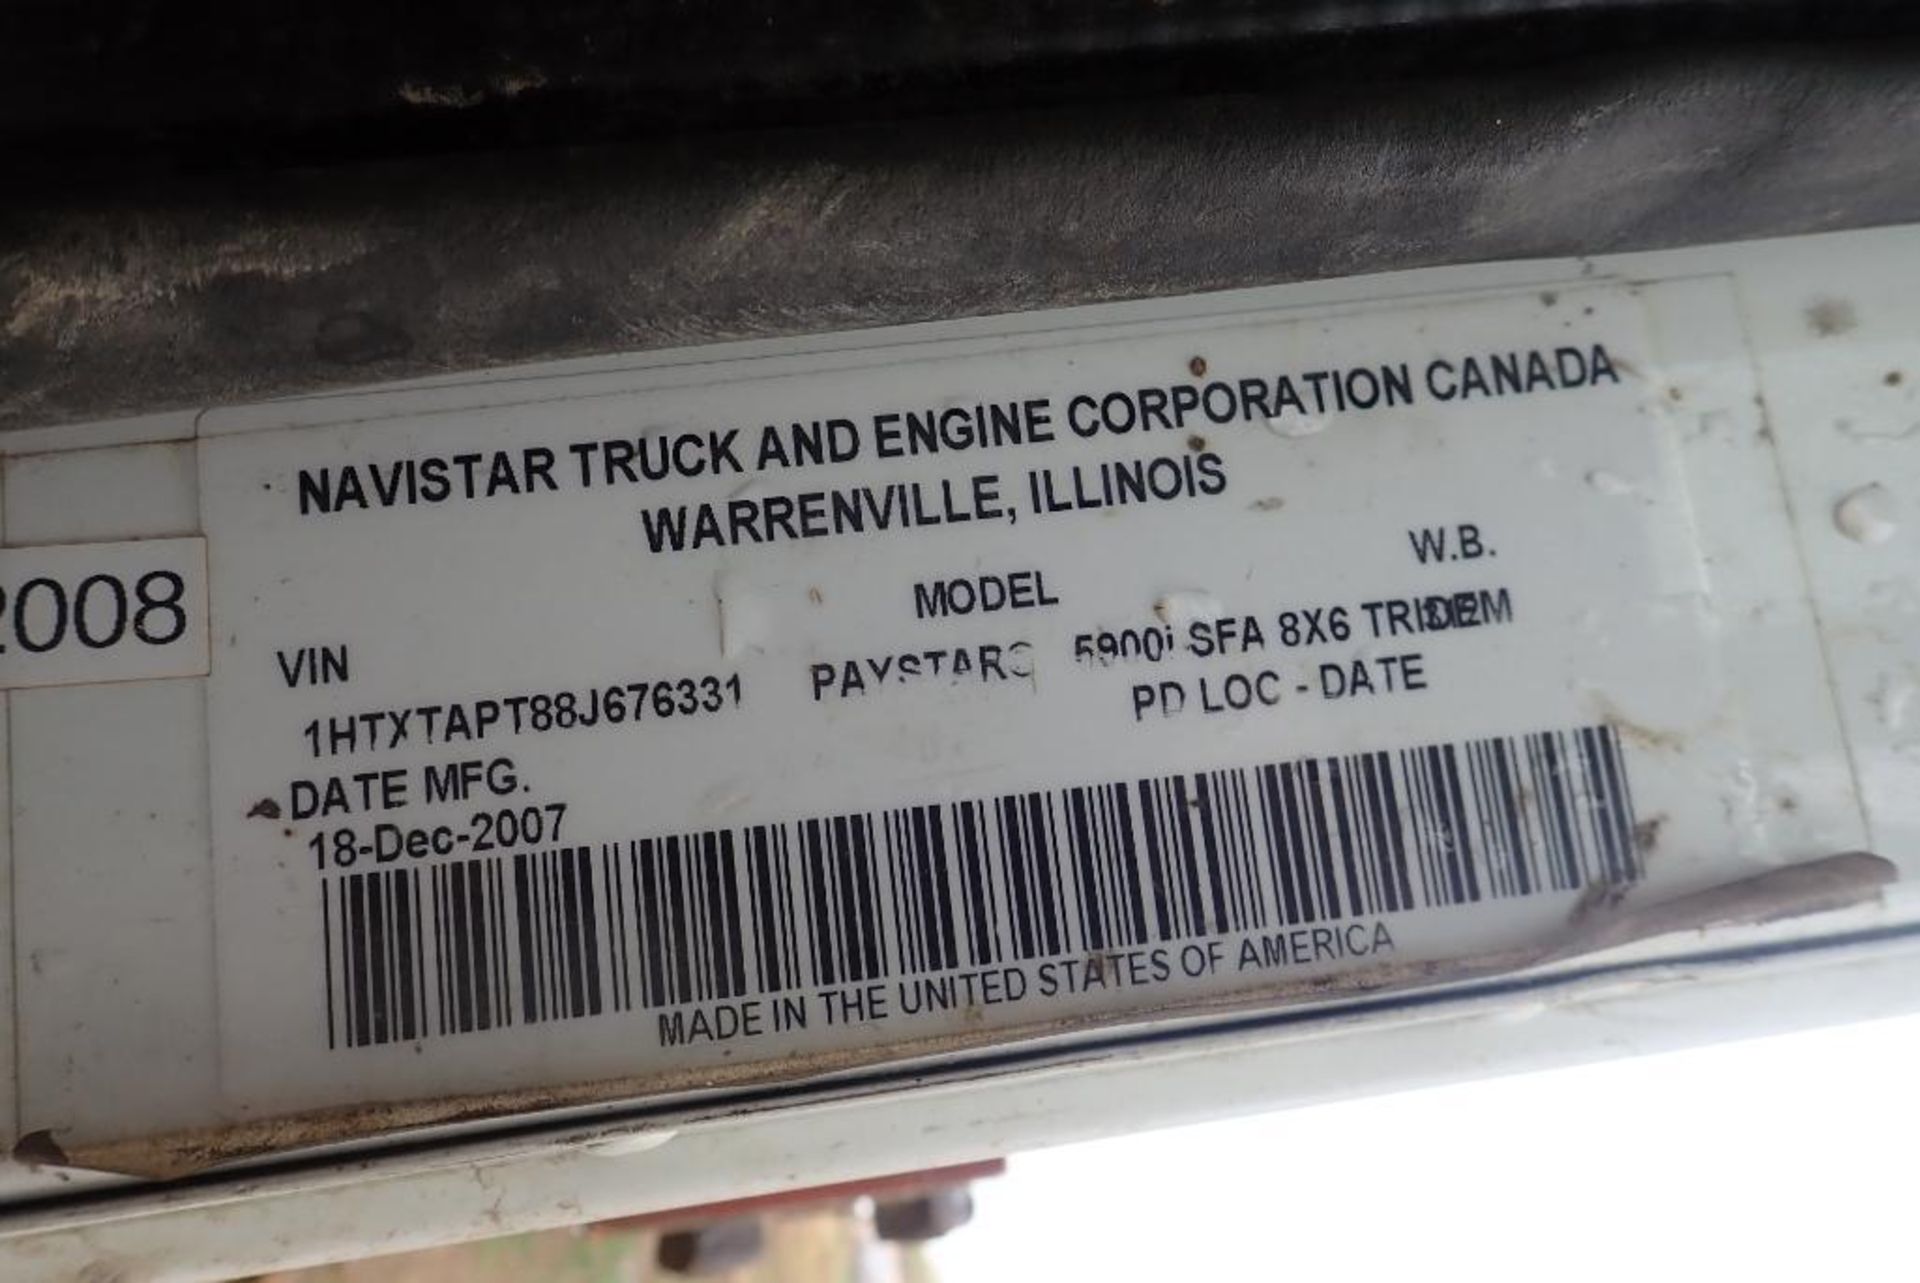 2008 International Paystar 5900 Tridem Axle Pump Truck, VIN 1HTXTAPT88J676331. - Image 10 of 10